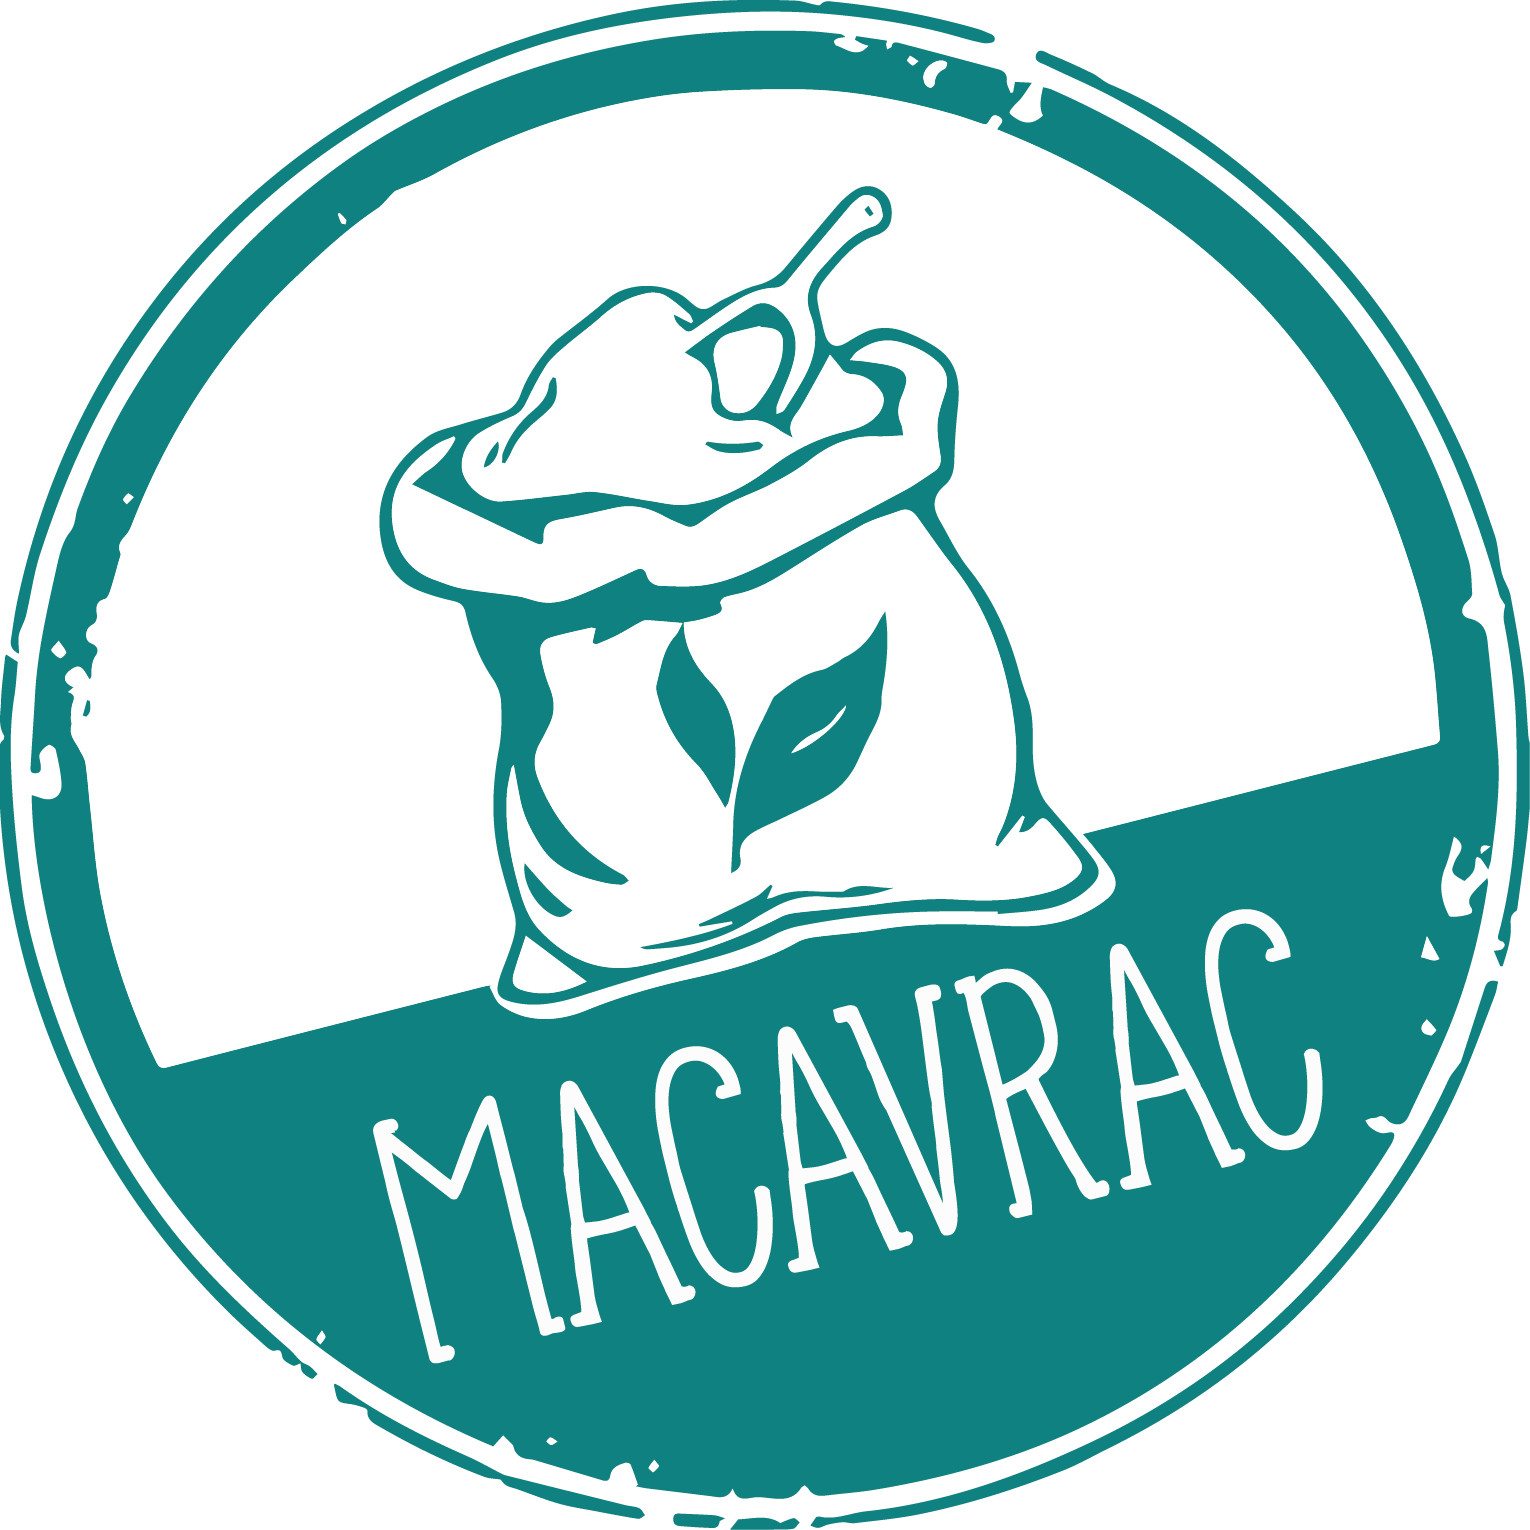 Macavrac